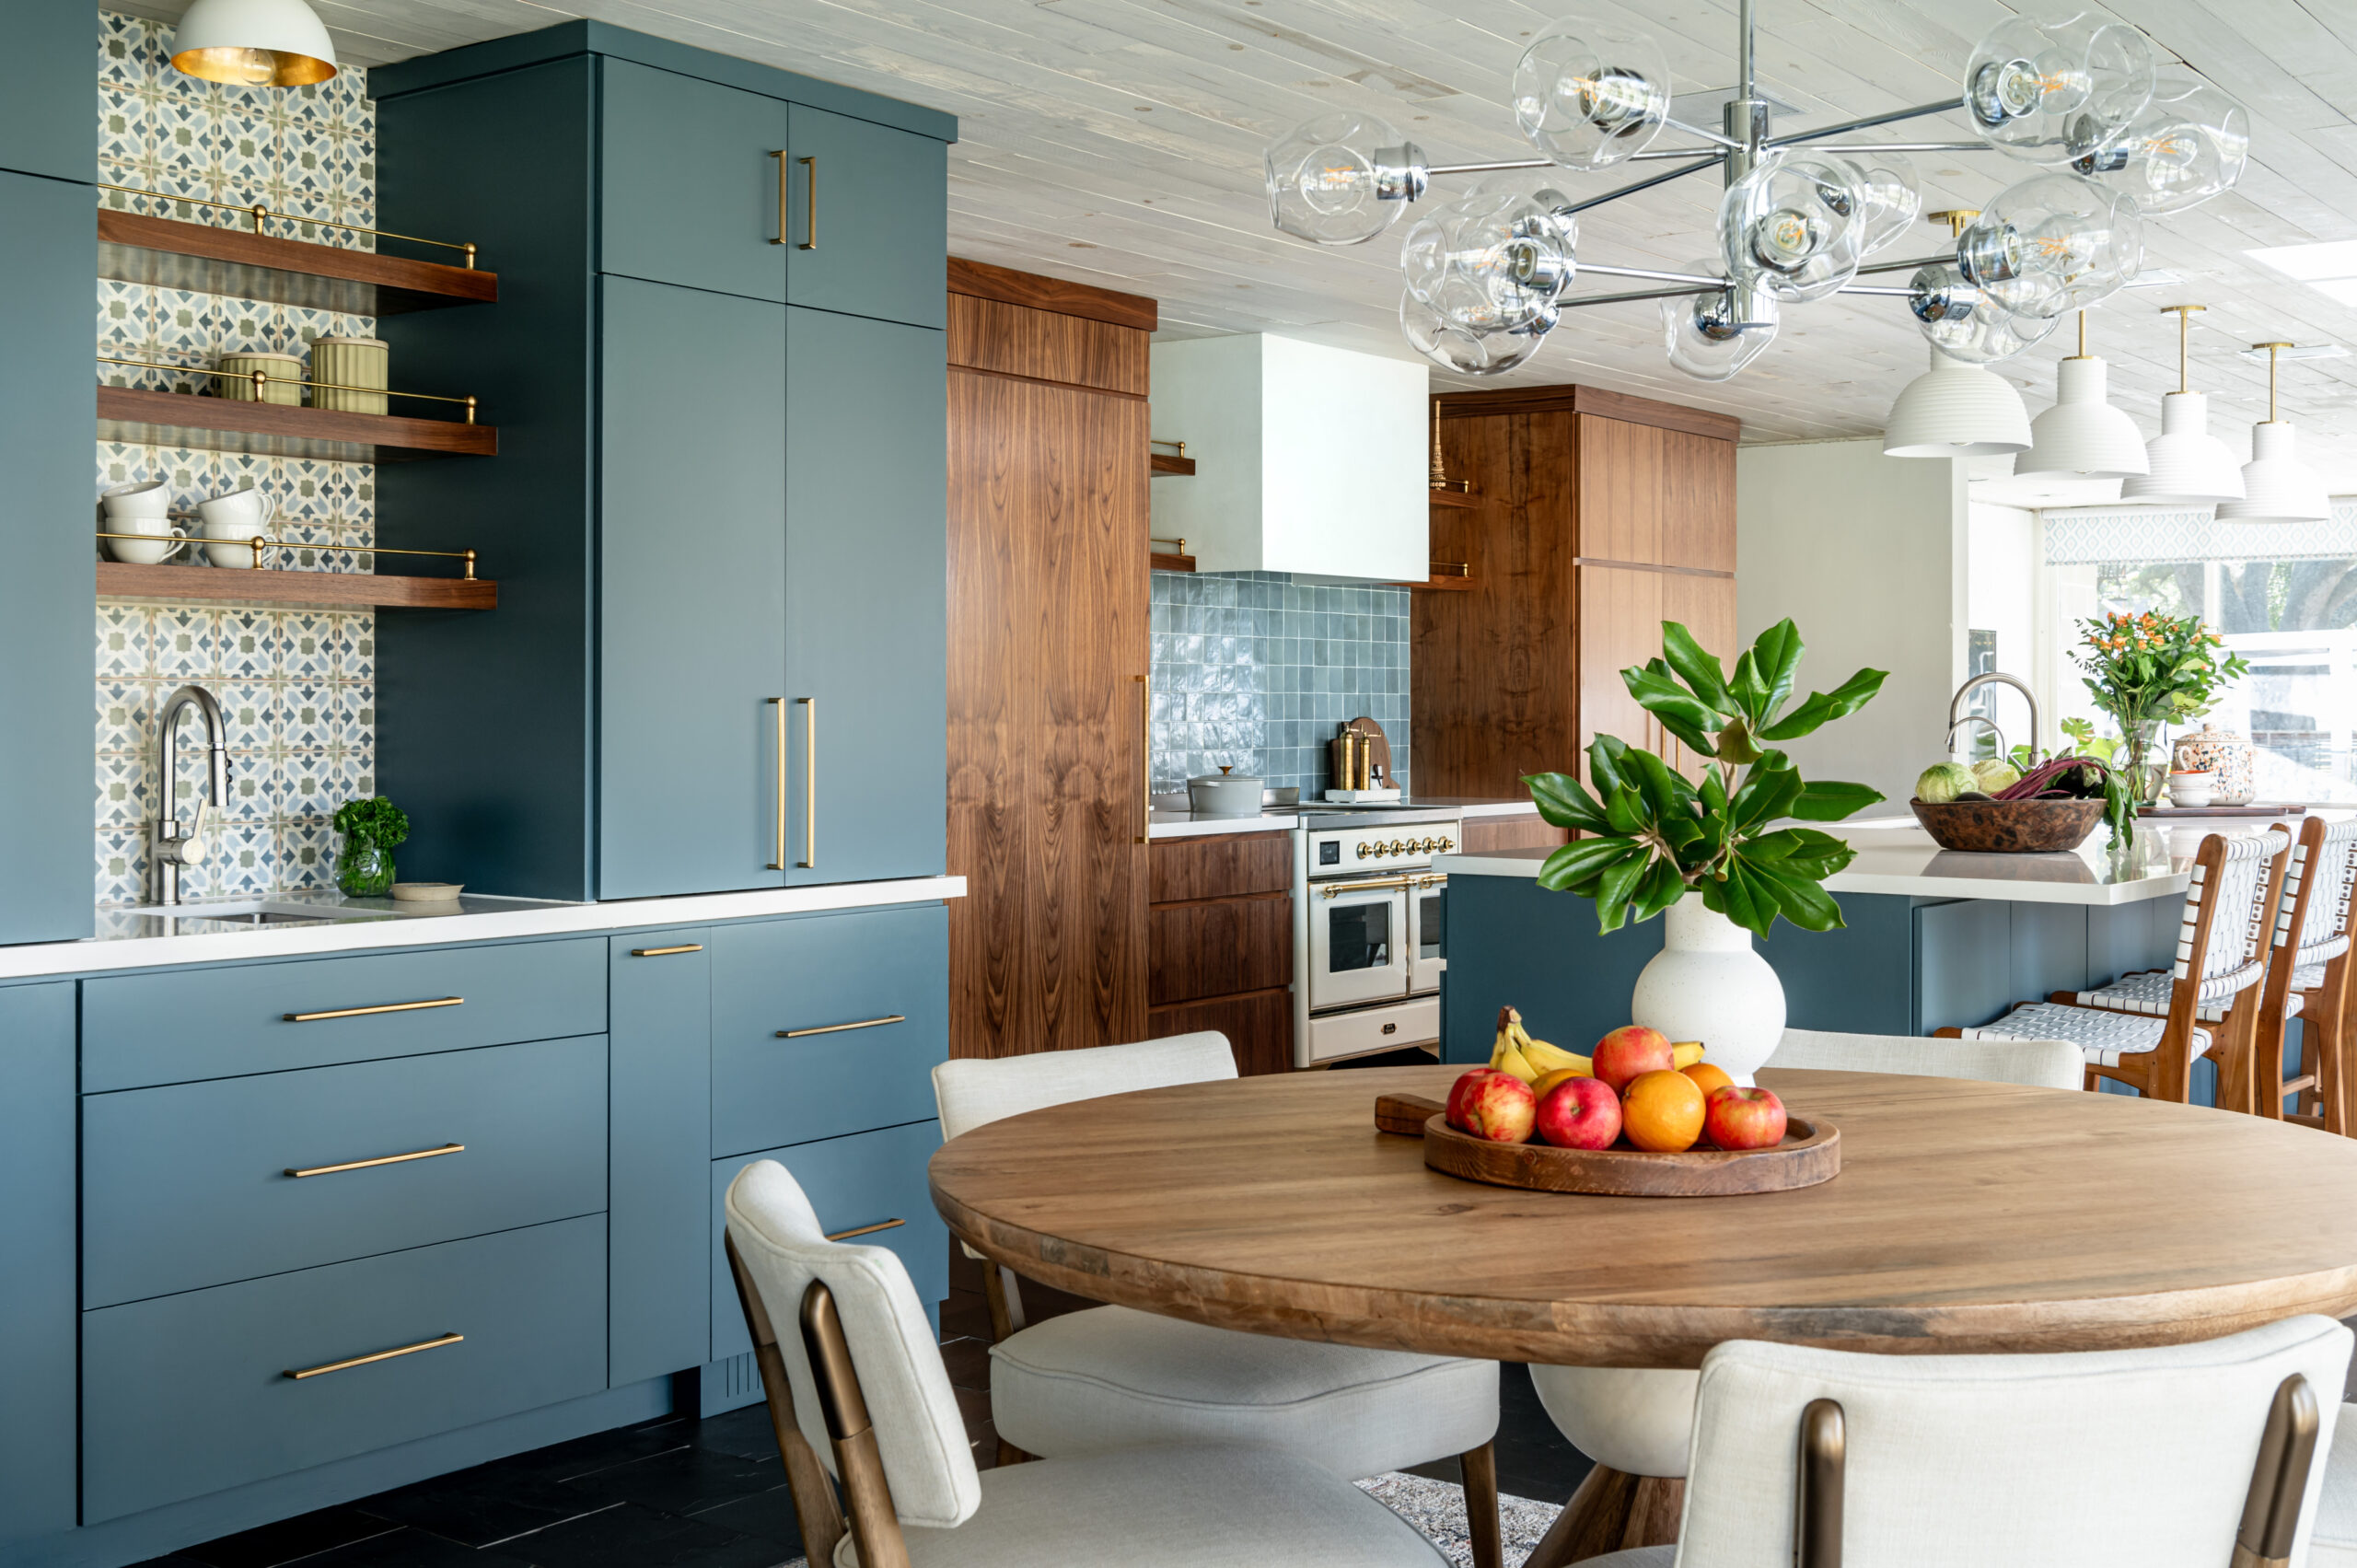 Midcentury kitchen interior design, with tile backsplash, wood cabinets, and blue cabinetry